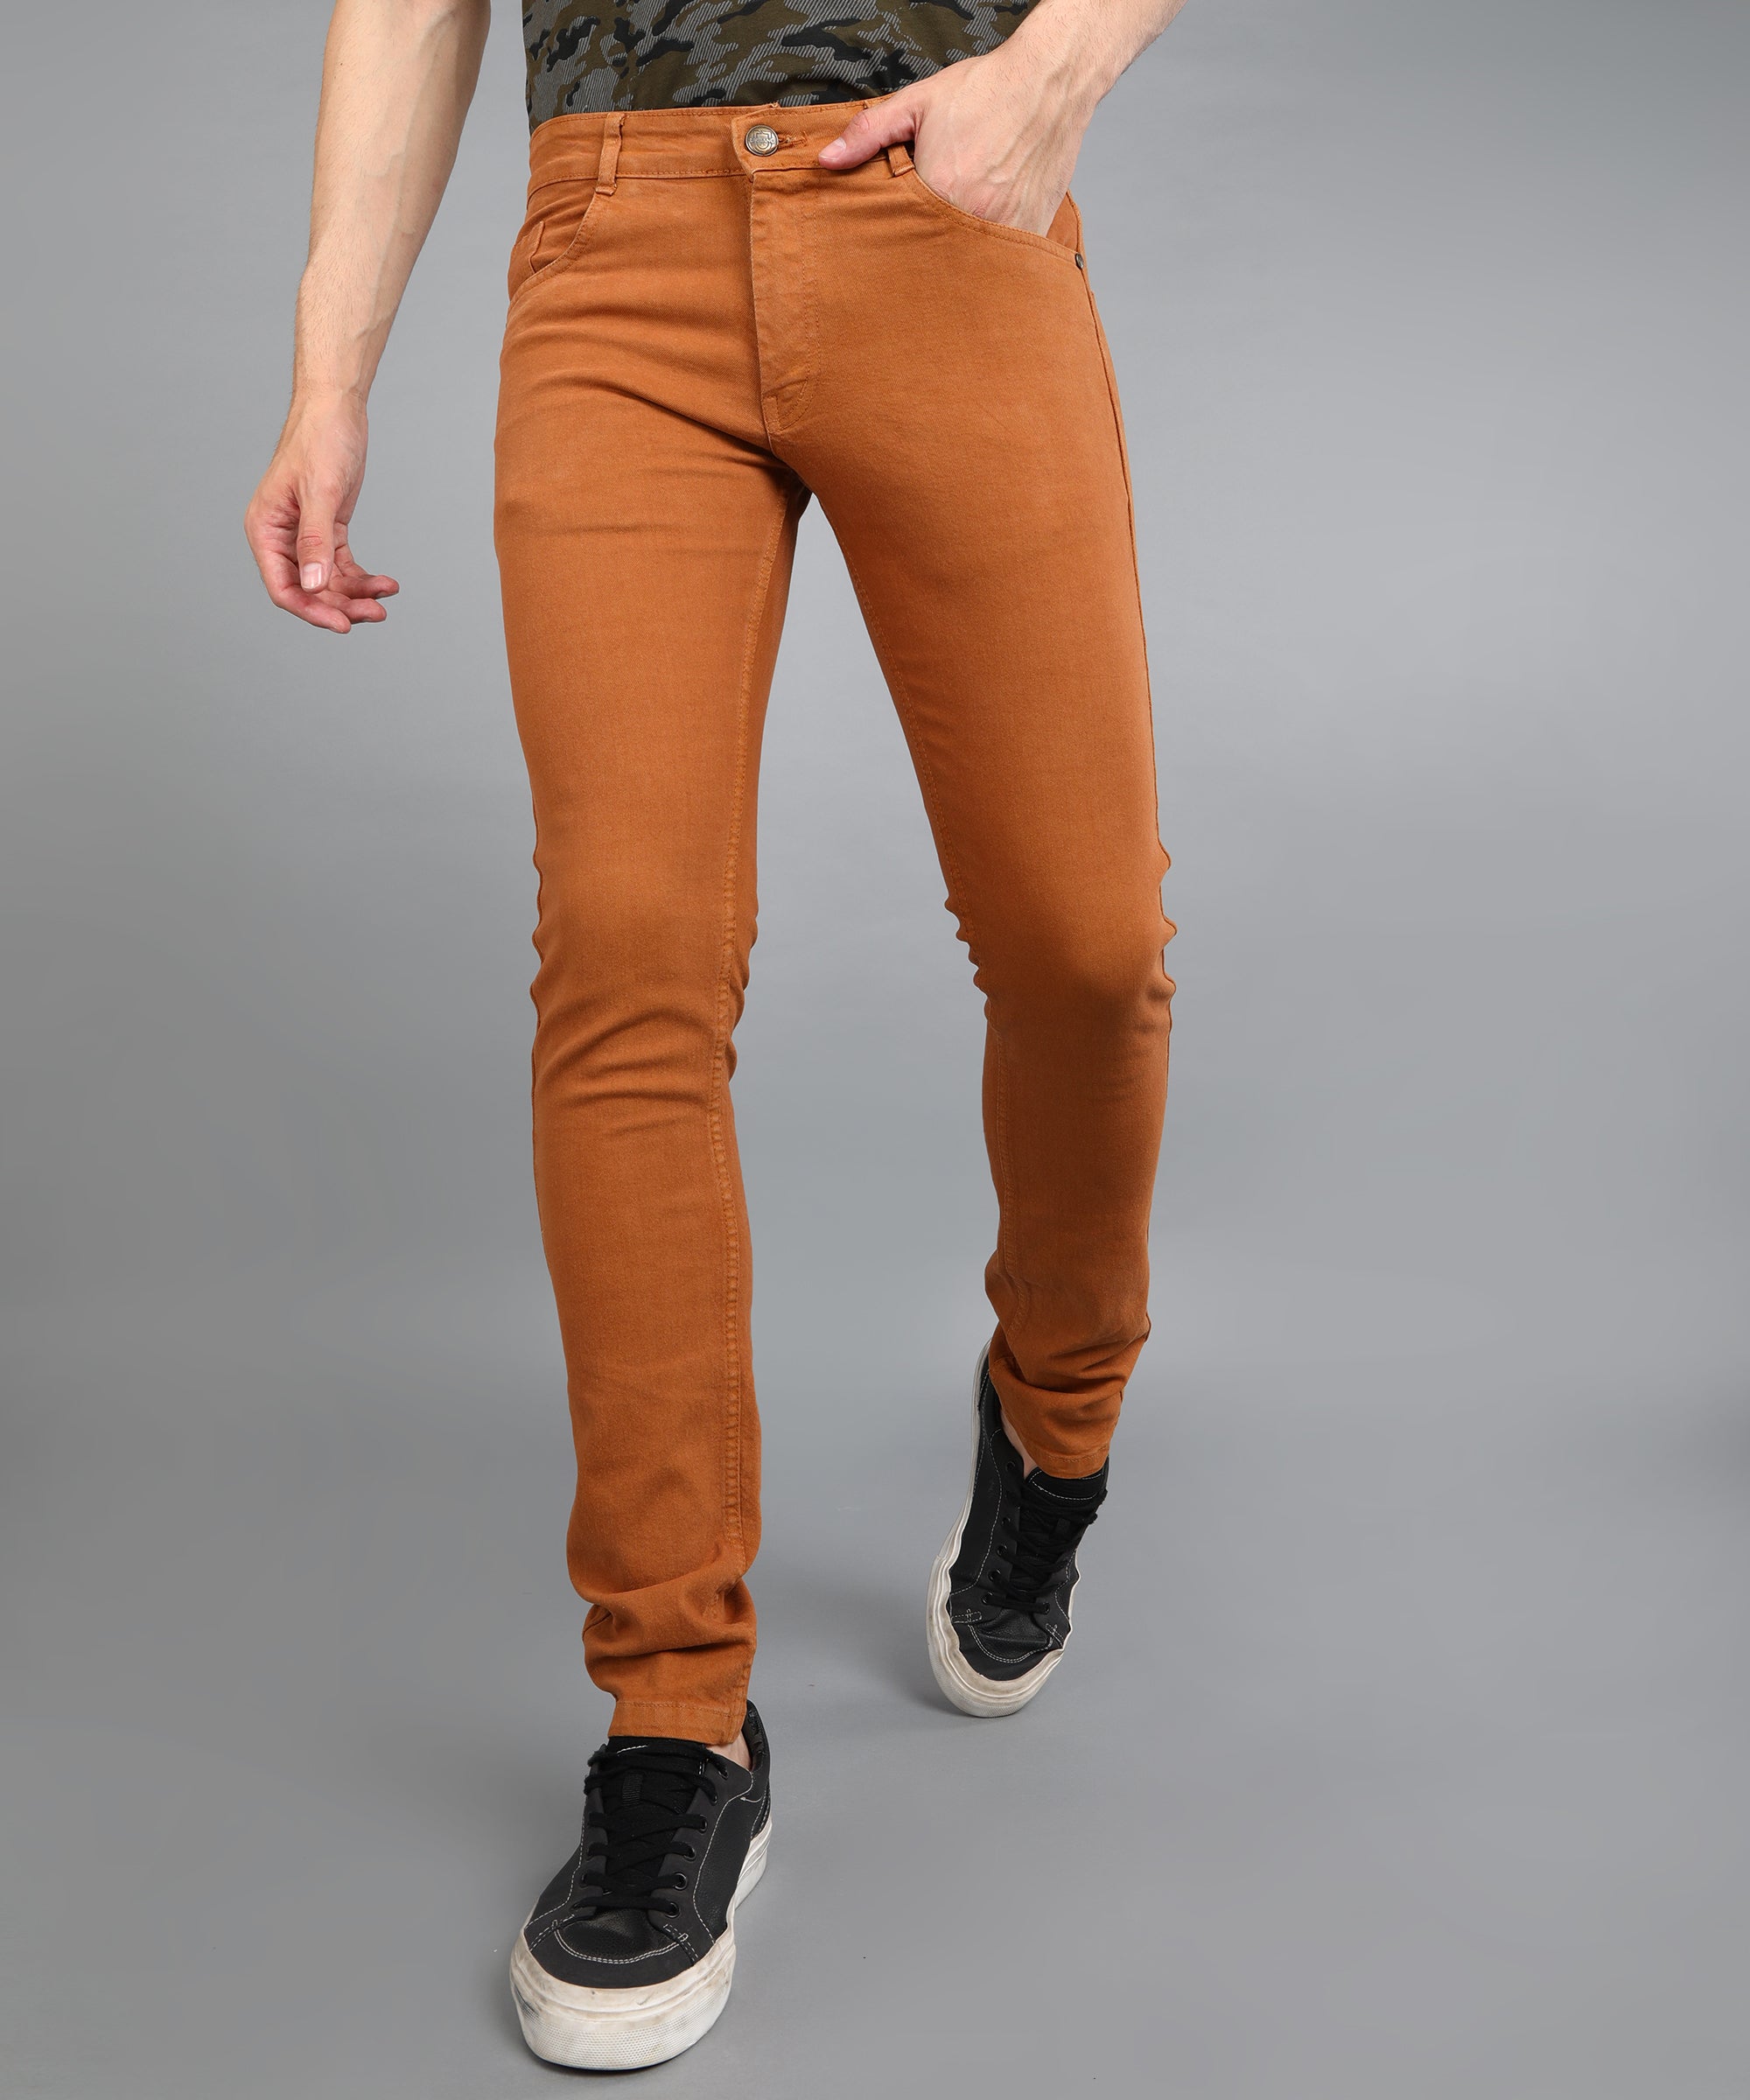 Urbano Fashion Men's Khaki Slim Fit Washed Jeans Stretchable